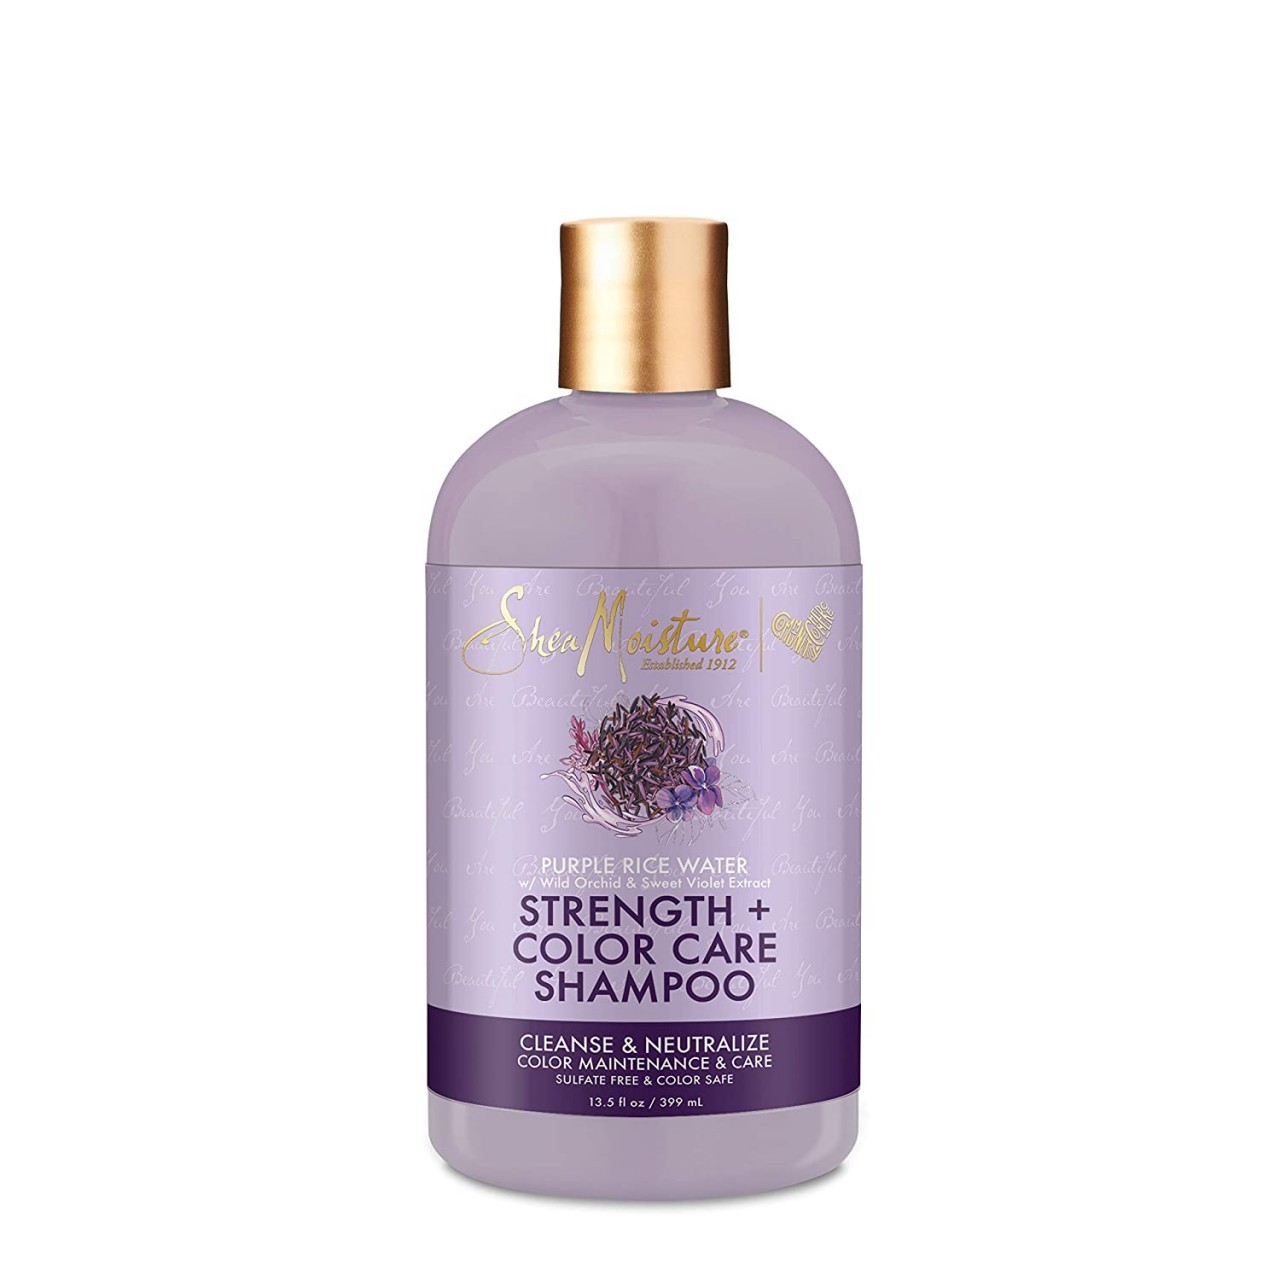 SheaMoisture Strength + Color Care Shampoo with Purple Rice Water - 13 fl oz